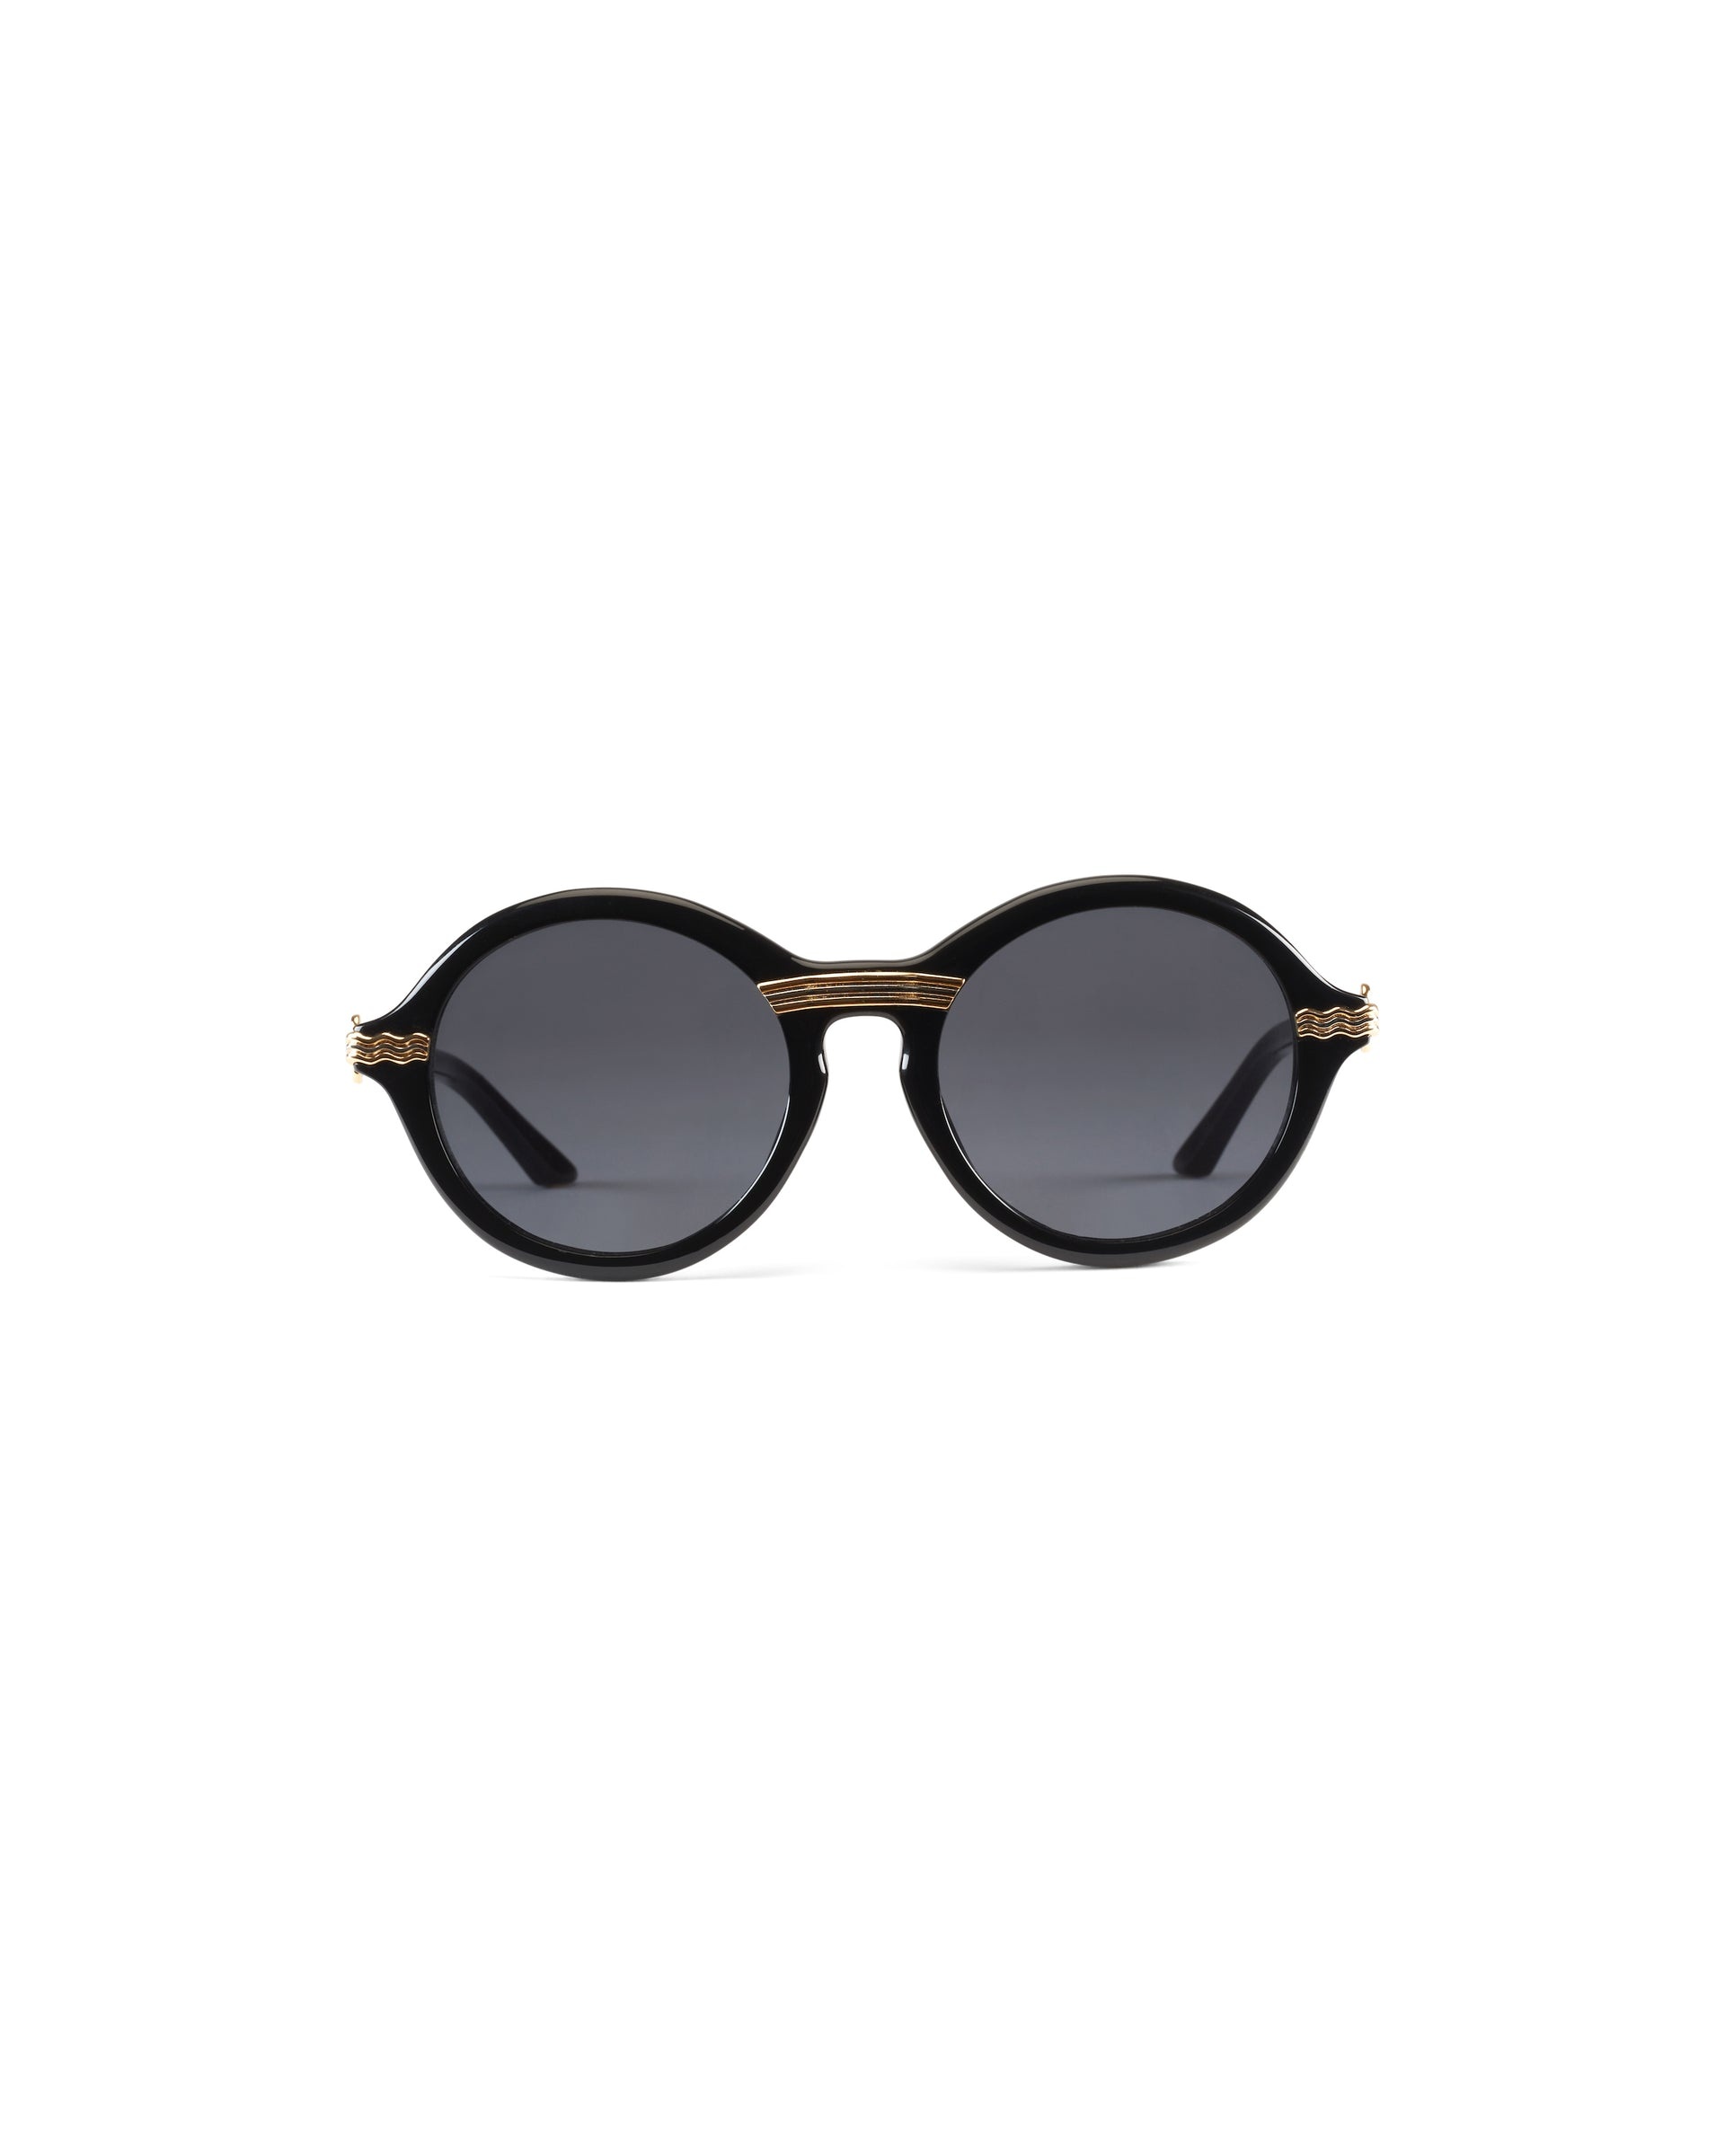 Tajer Black & Gold Sunglasses - 2